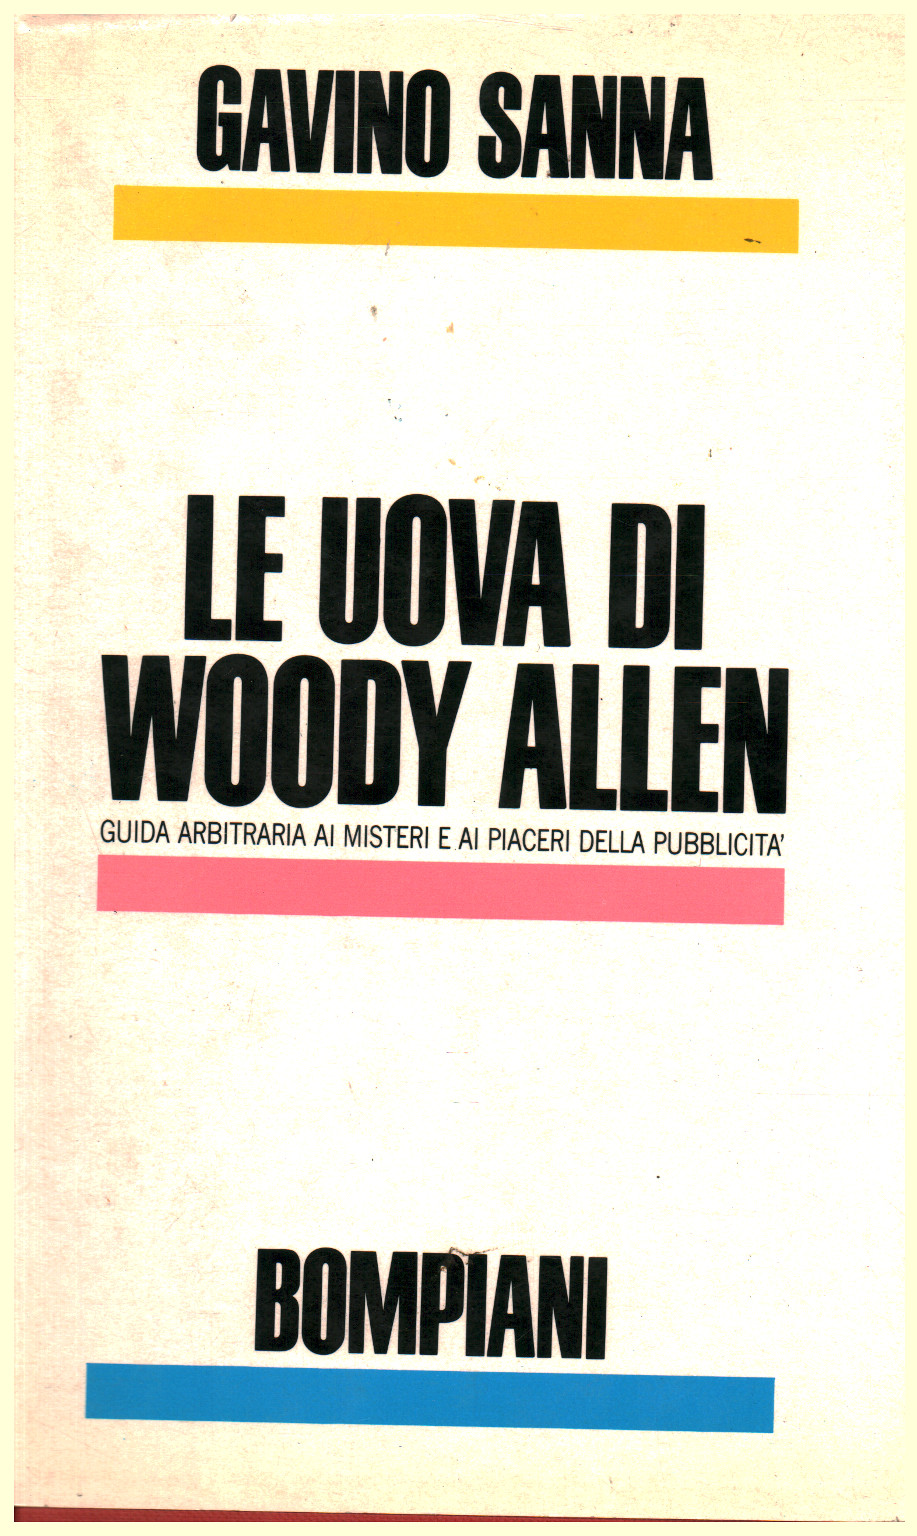 Huevos de Woody Allen, s.a.